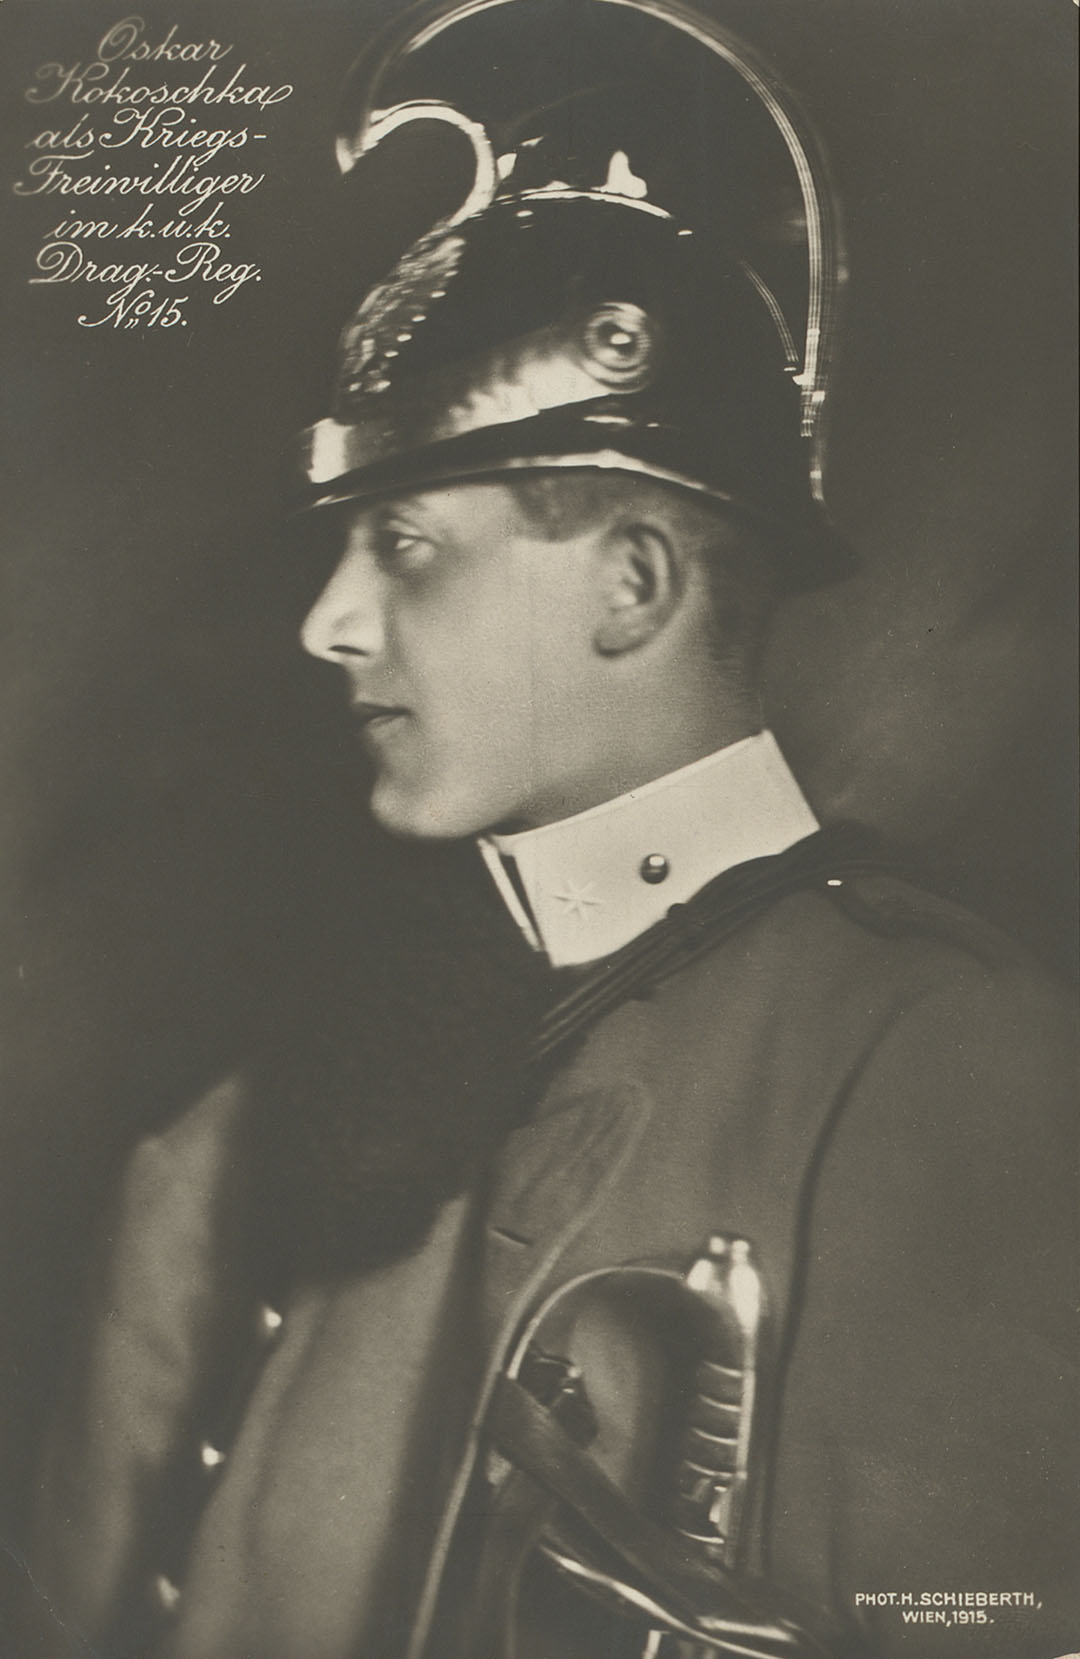 Oskar Kokoschka, aged 29 in 1915, wearing the uniform of the 15th Regiment of Royal and Imperial Dragoons (ZBZ, estate of O. Kokoschka 71.1 / photo: H. Schieberth)